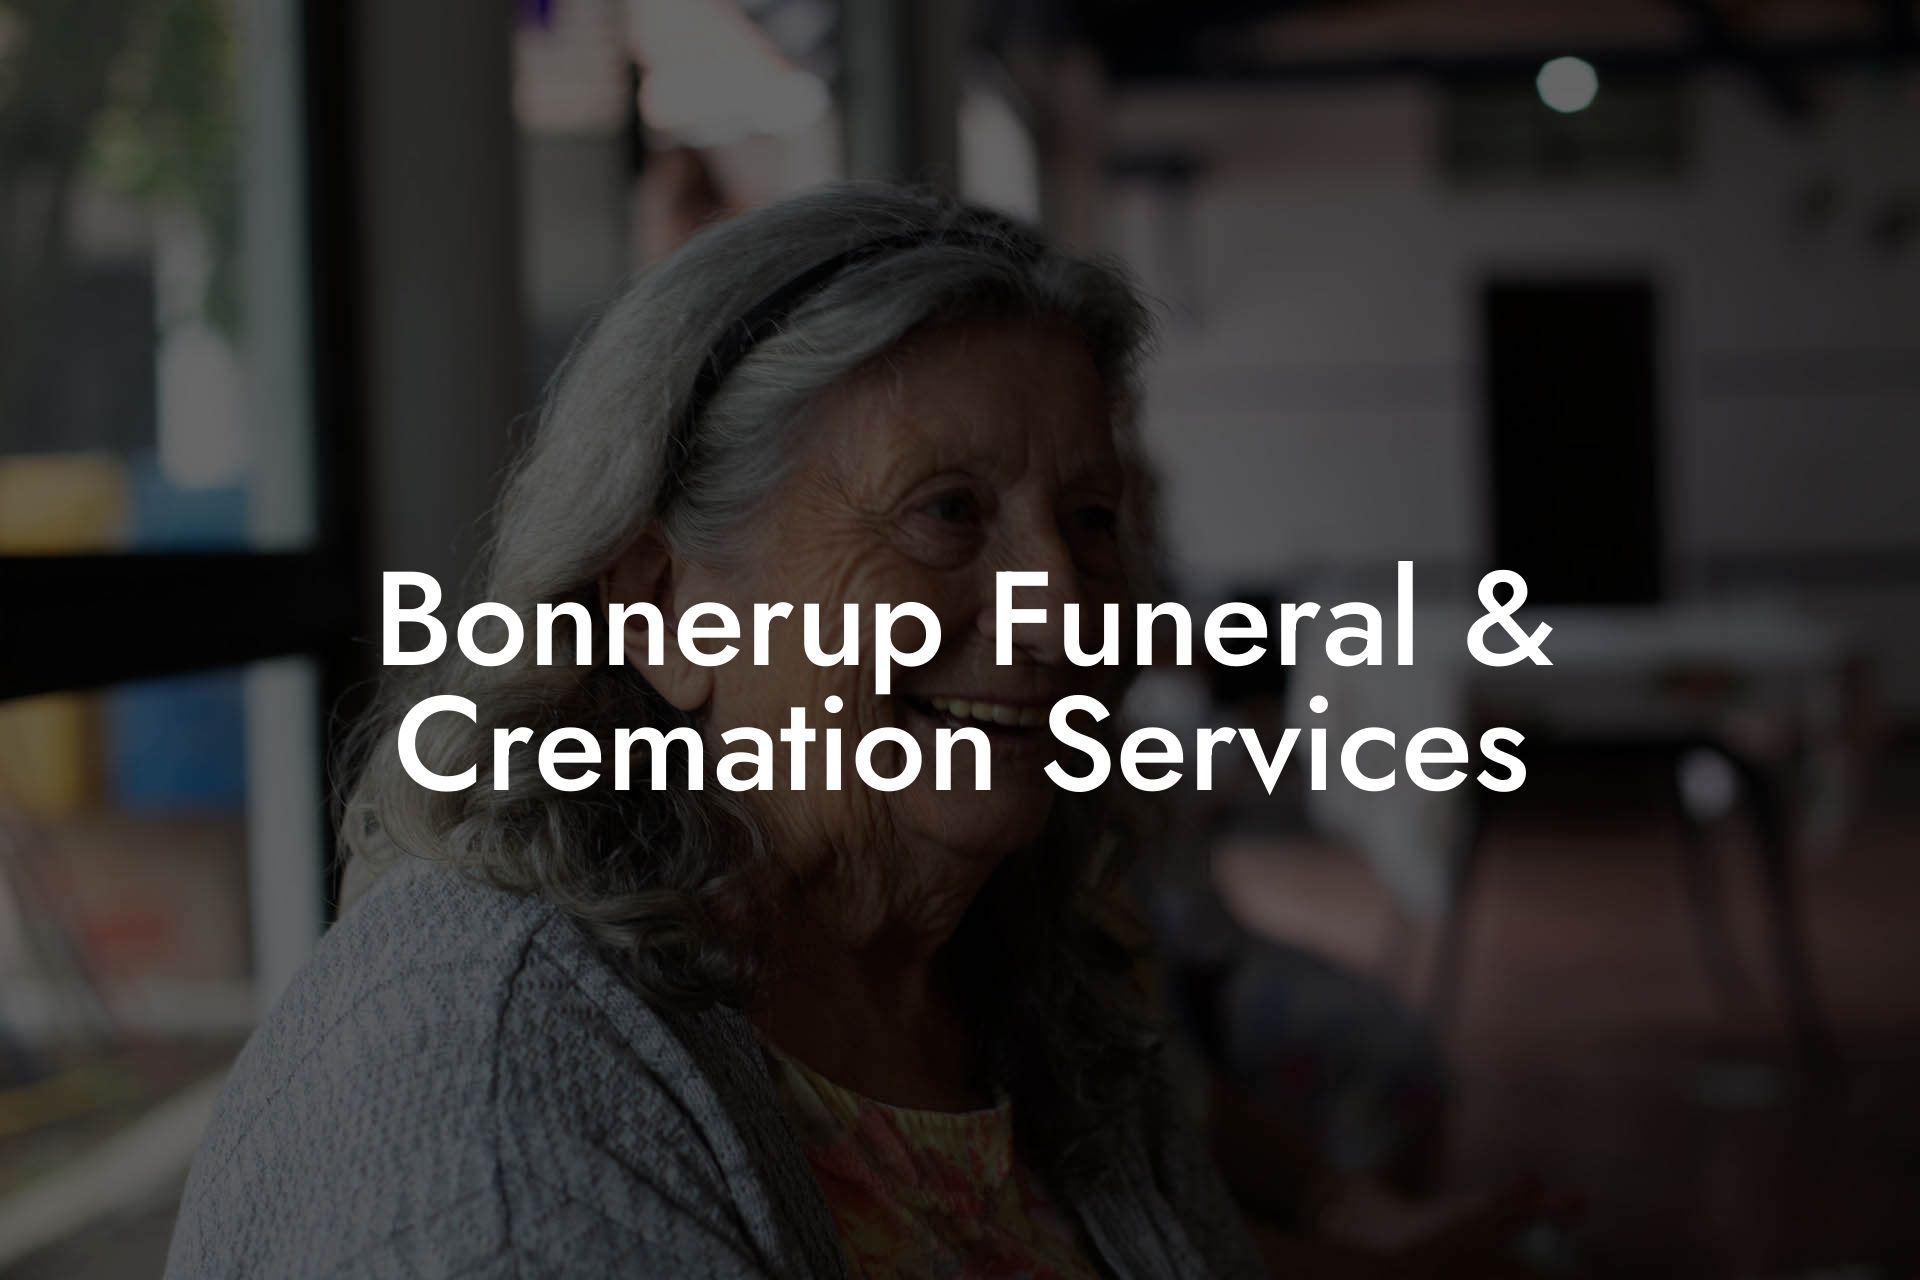 Bonnerup Funeral & Cremation Services